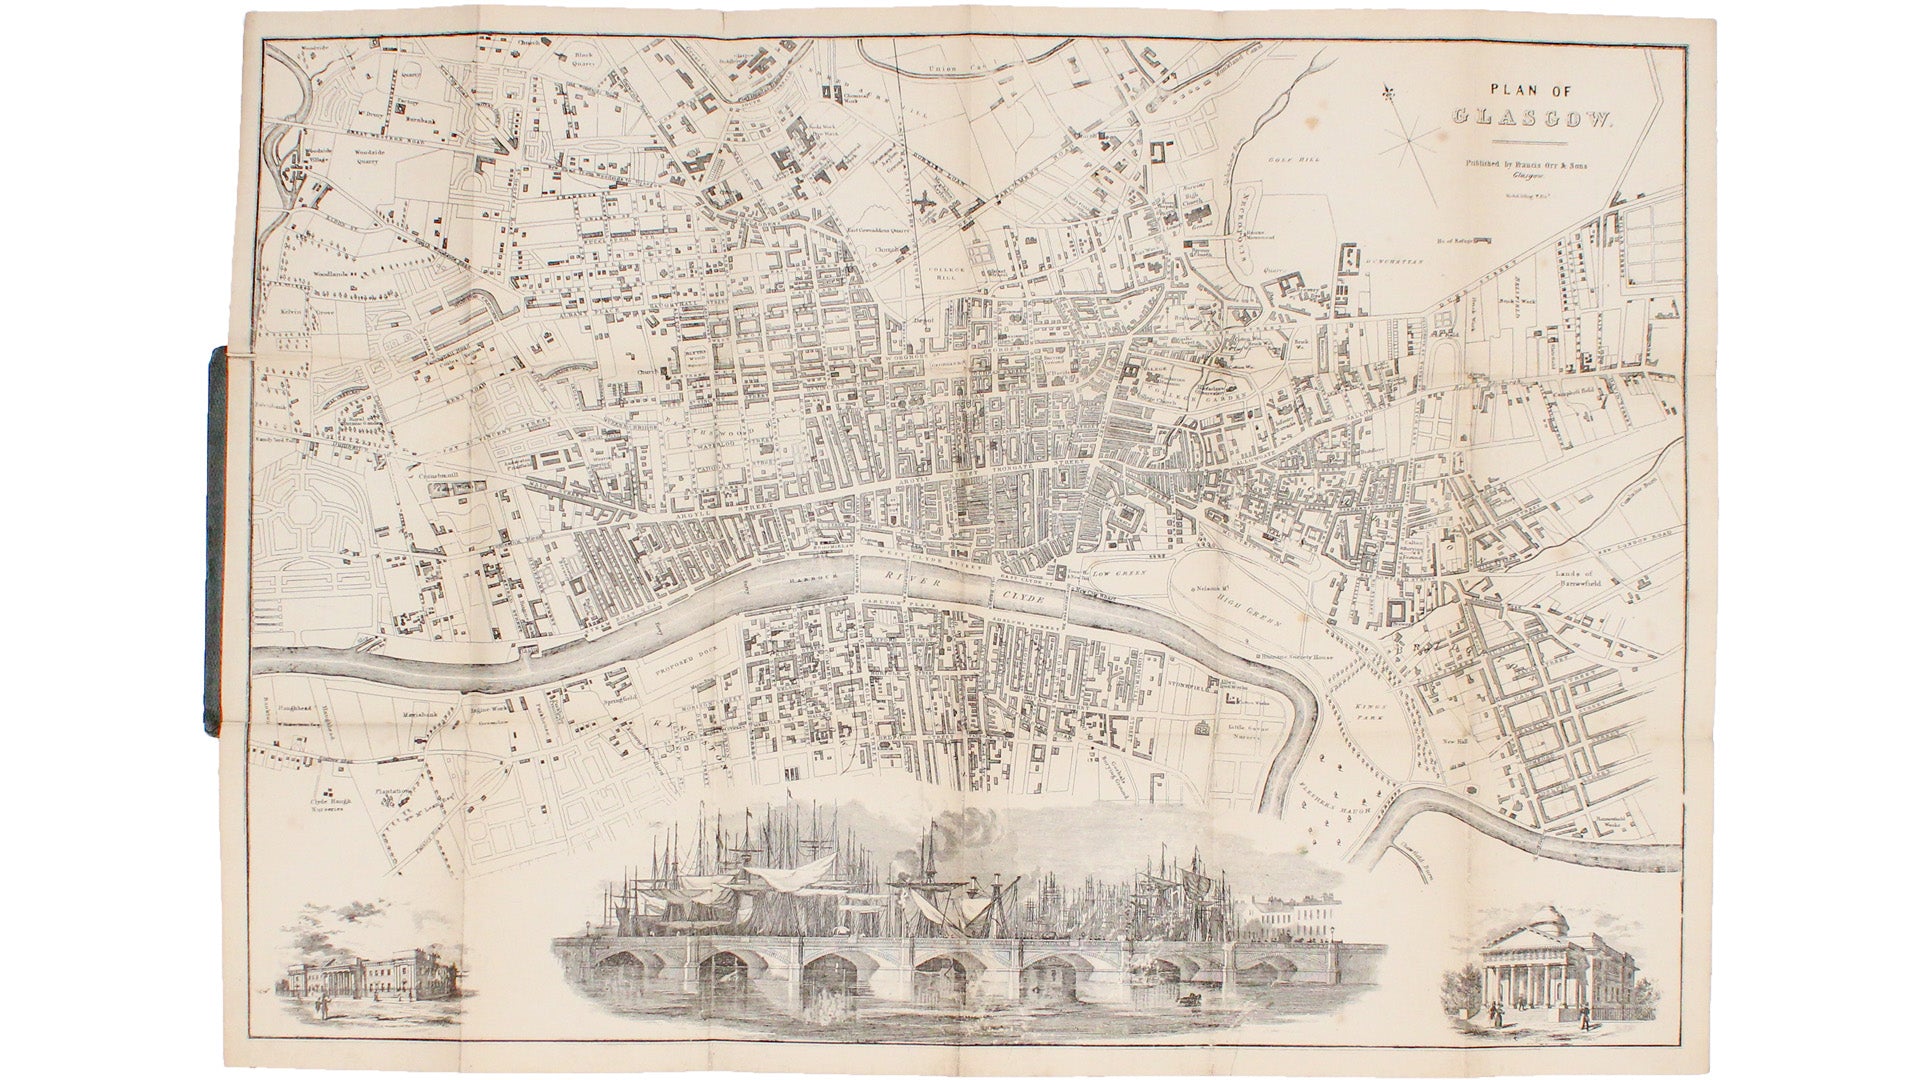 Nichol's Folding Map of Glasgow